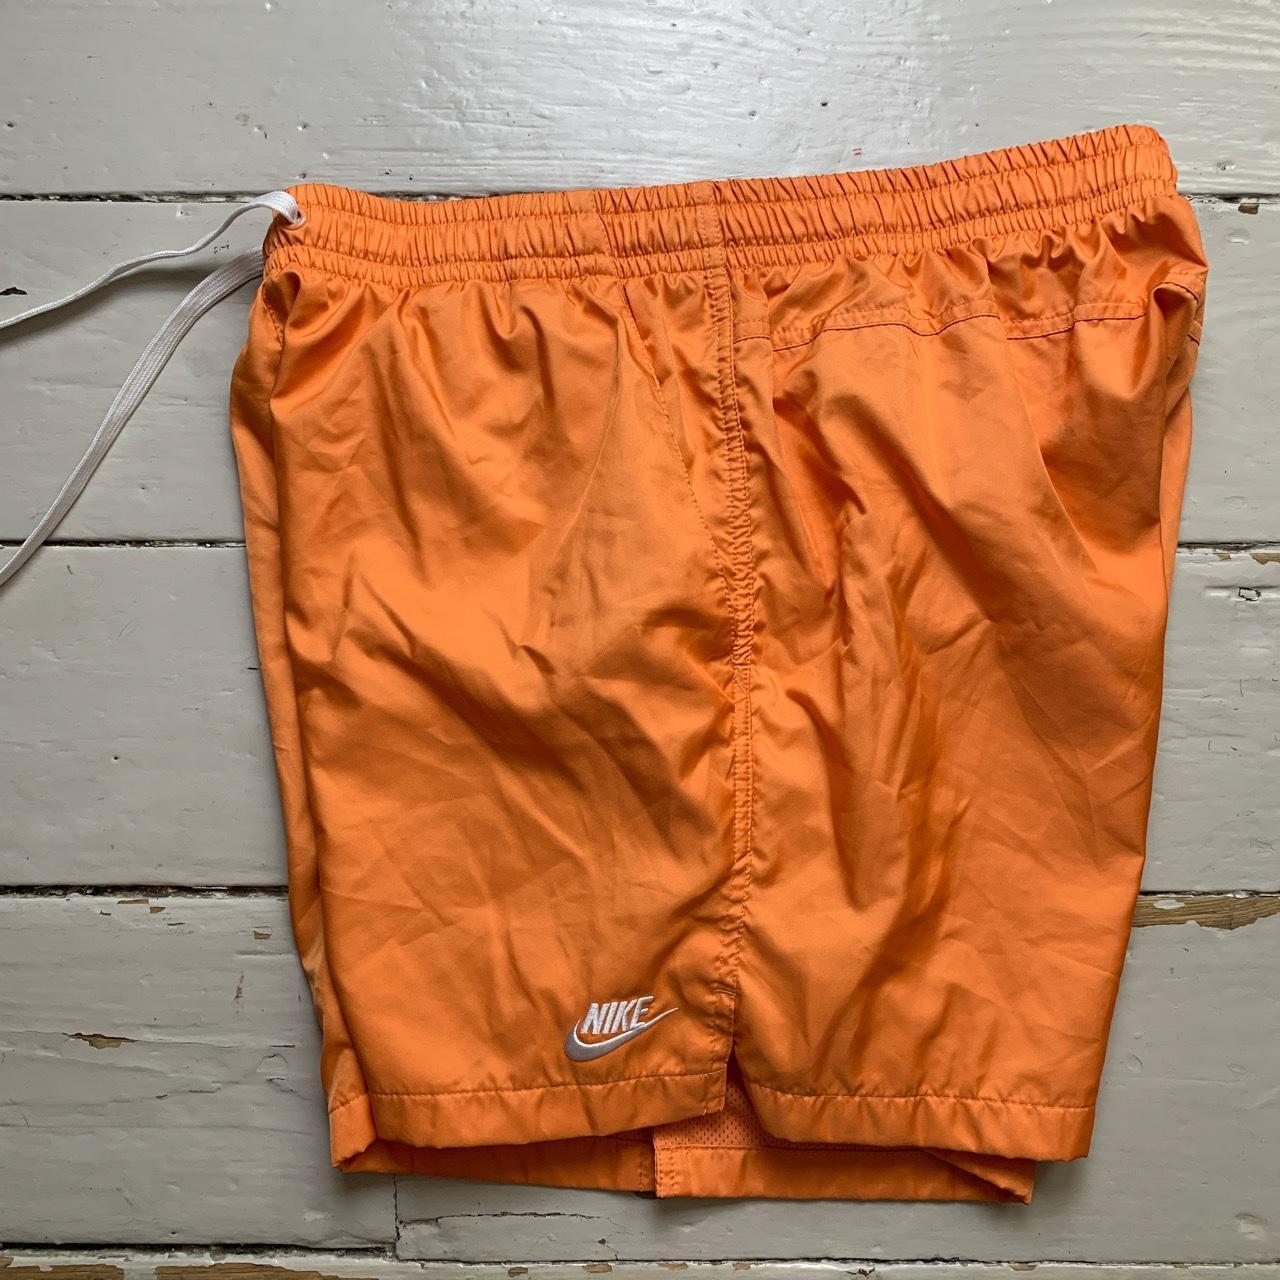 Nike Shell Swim Shorts Orange and White Swoosh